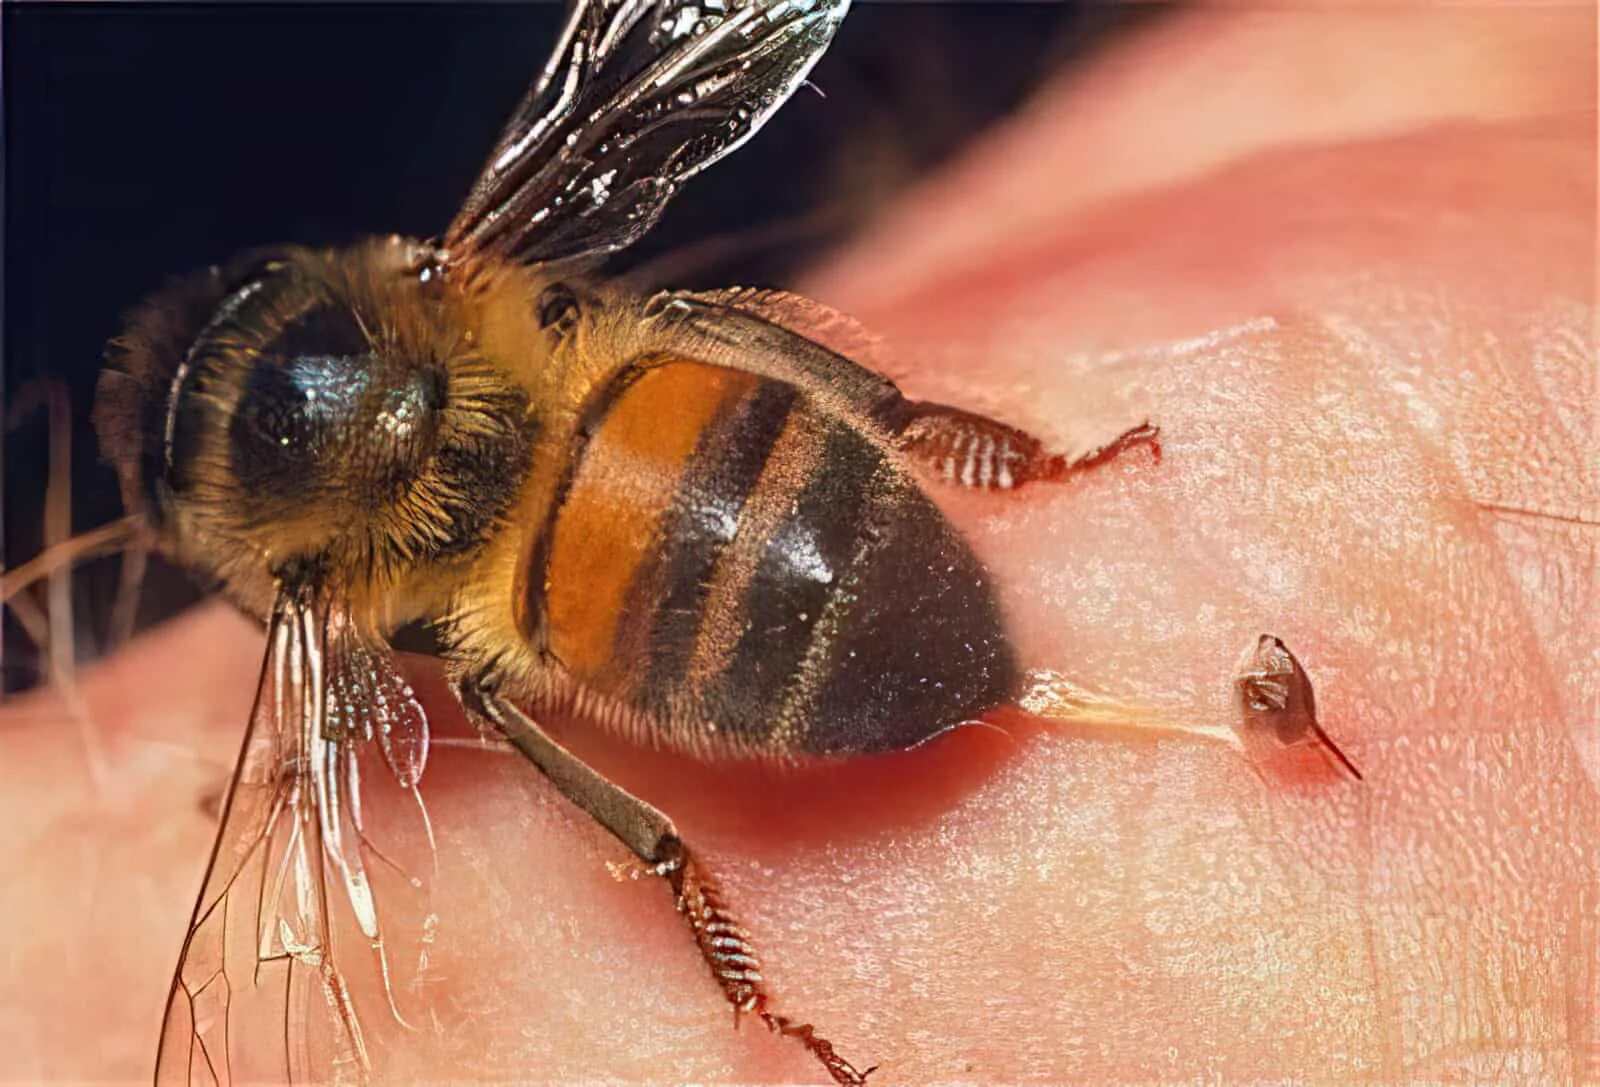 Шмель пчела Оса Шершень. Шмель пчела Оса Шершень укусы. Оса пчела Шмель Шершень отличия. Жало пчелы осы шмеля и шершня.